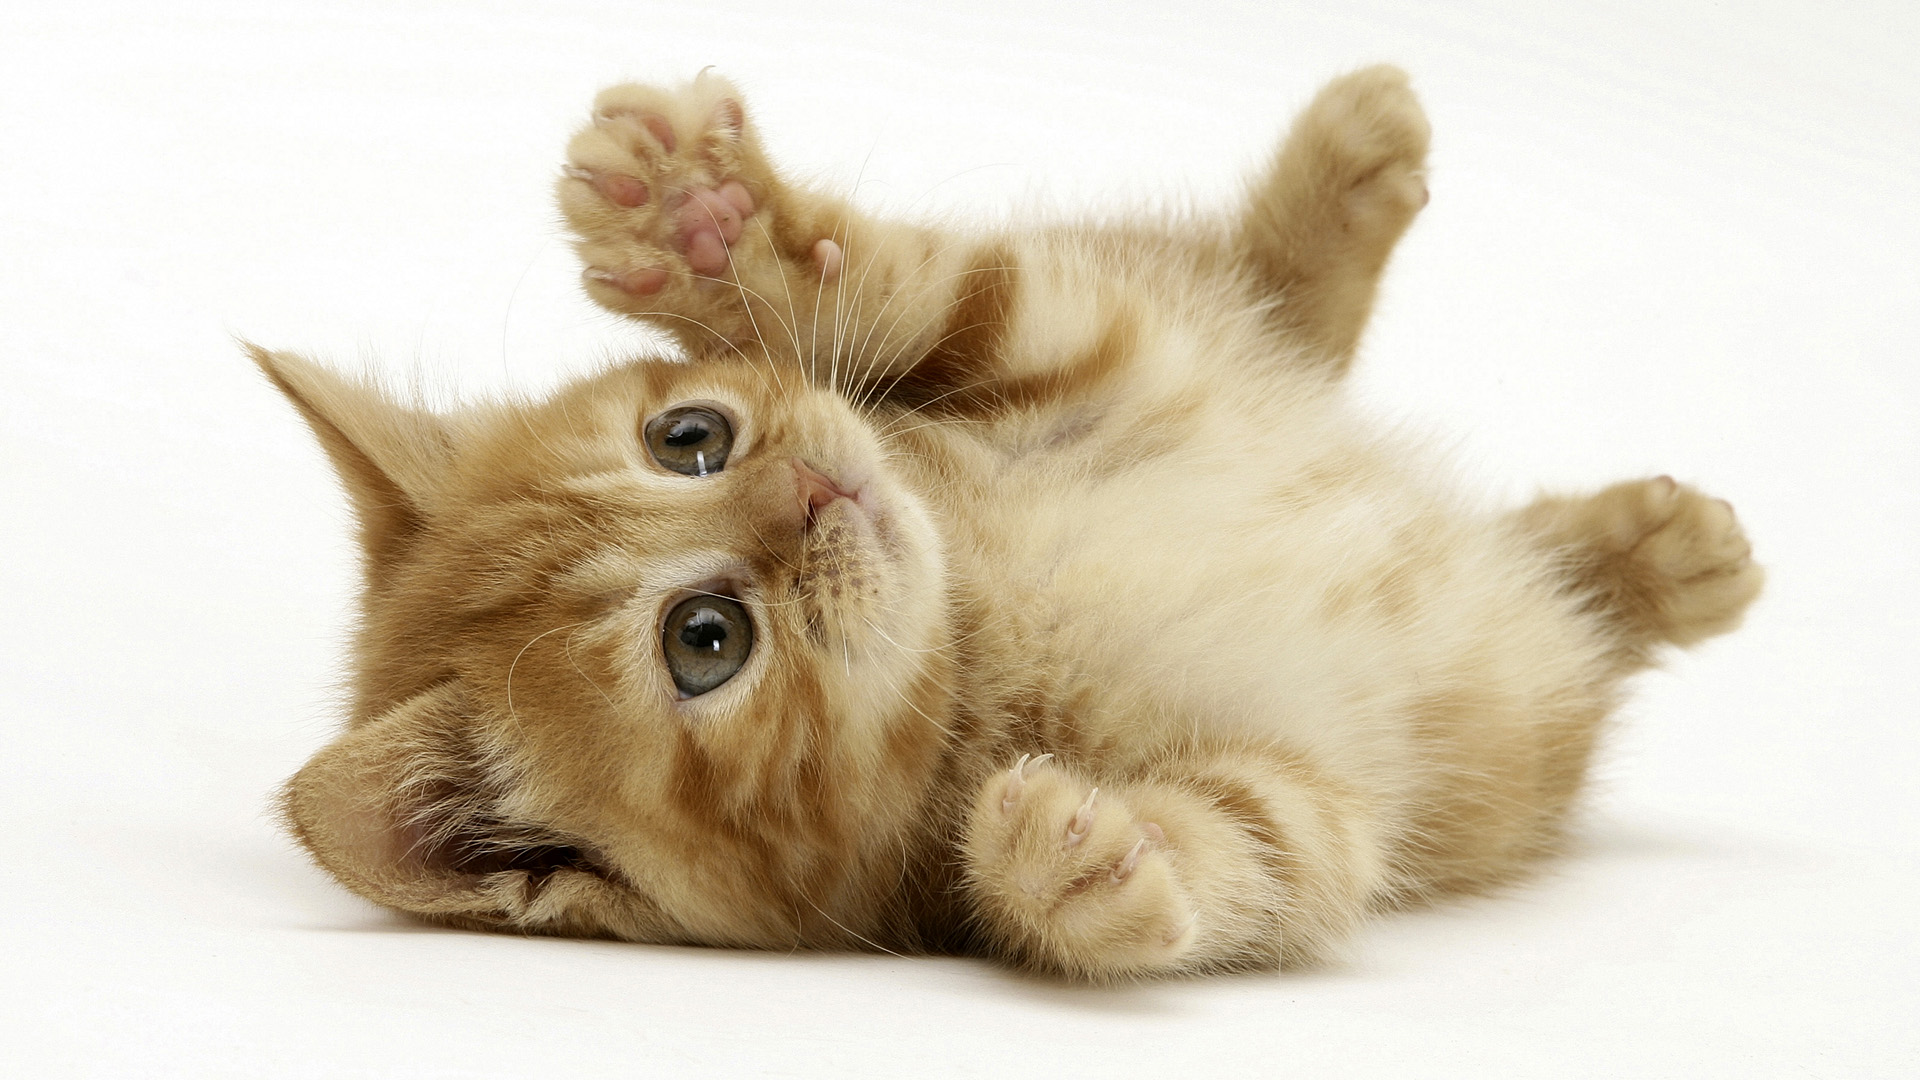 Cute little cat 1562 - Kitty - Animal